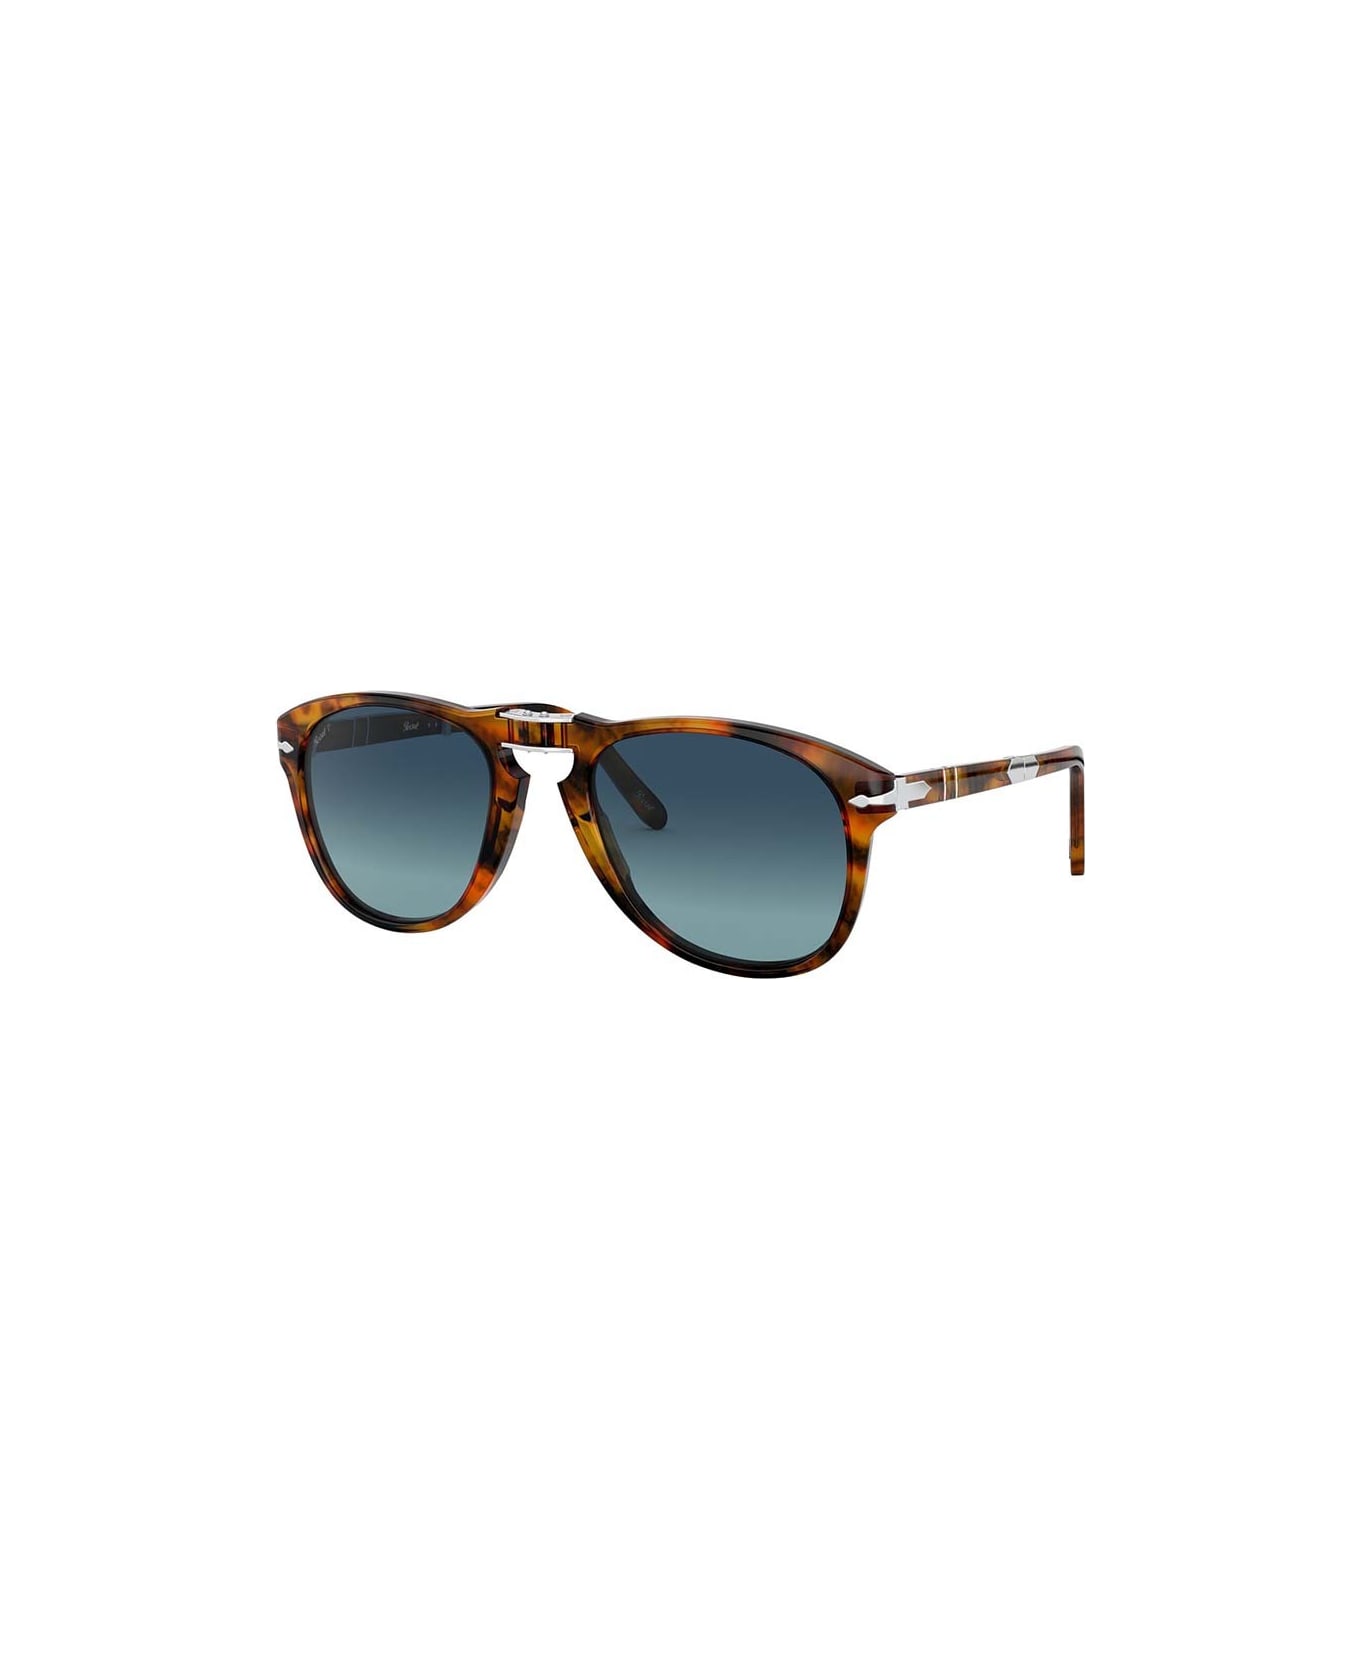 Persol Sunglasses - Havana/Blu